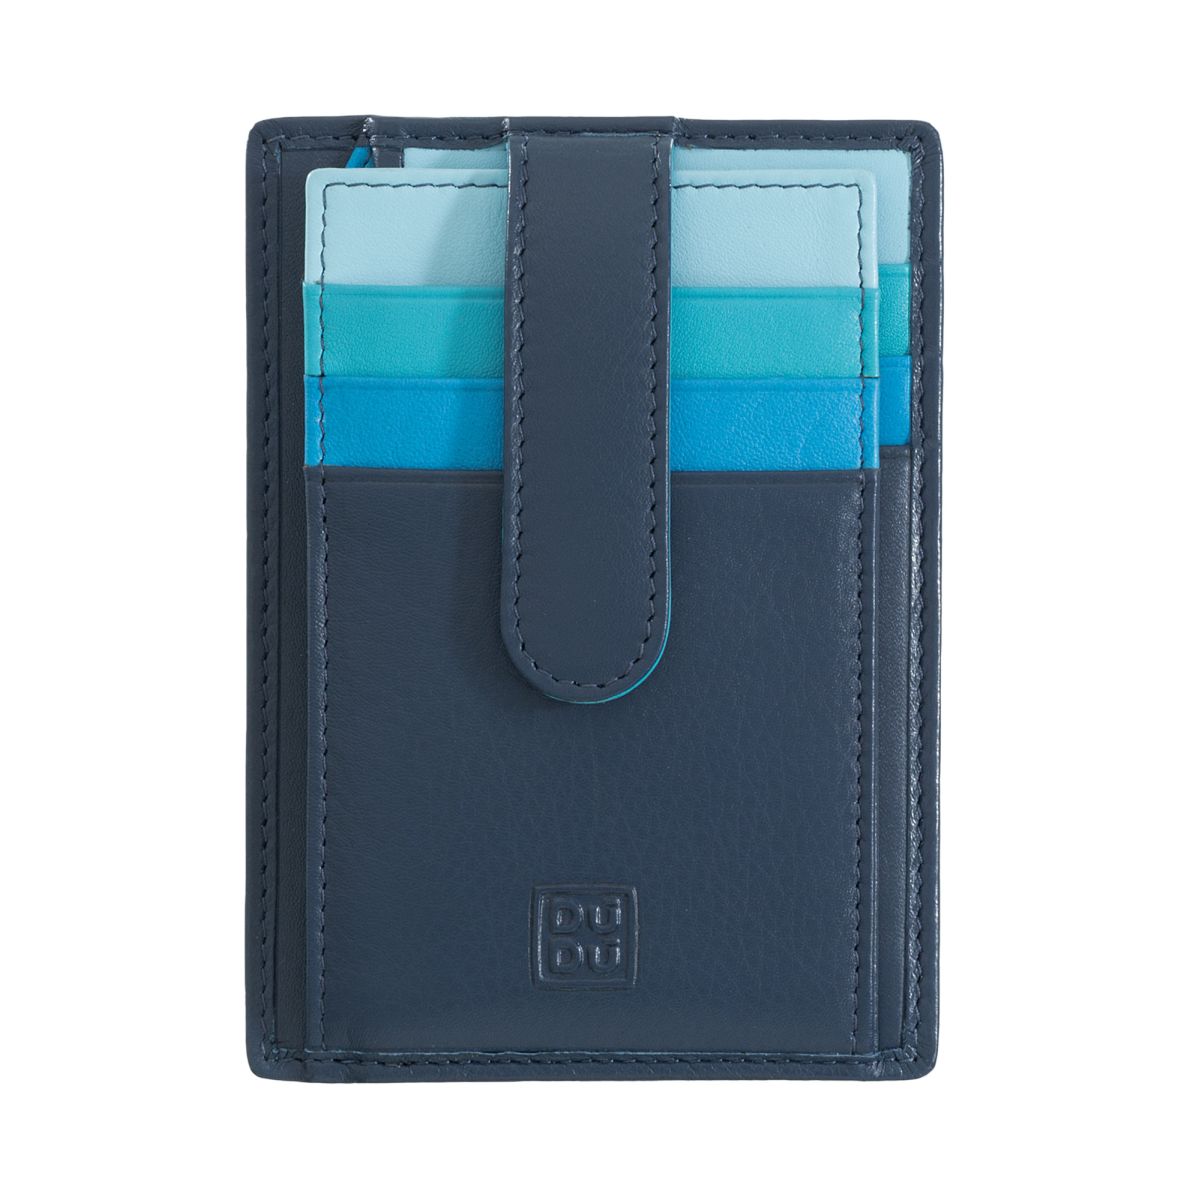 DuDu Compact multi color credit card holder wallet - Blue